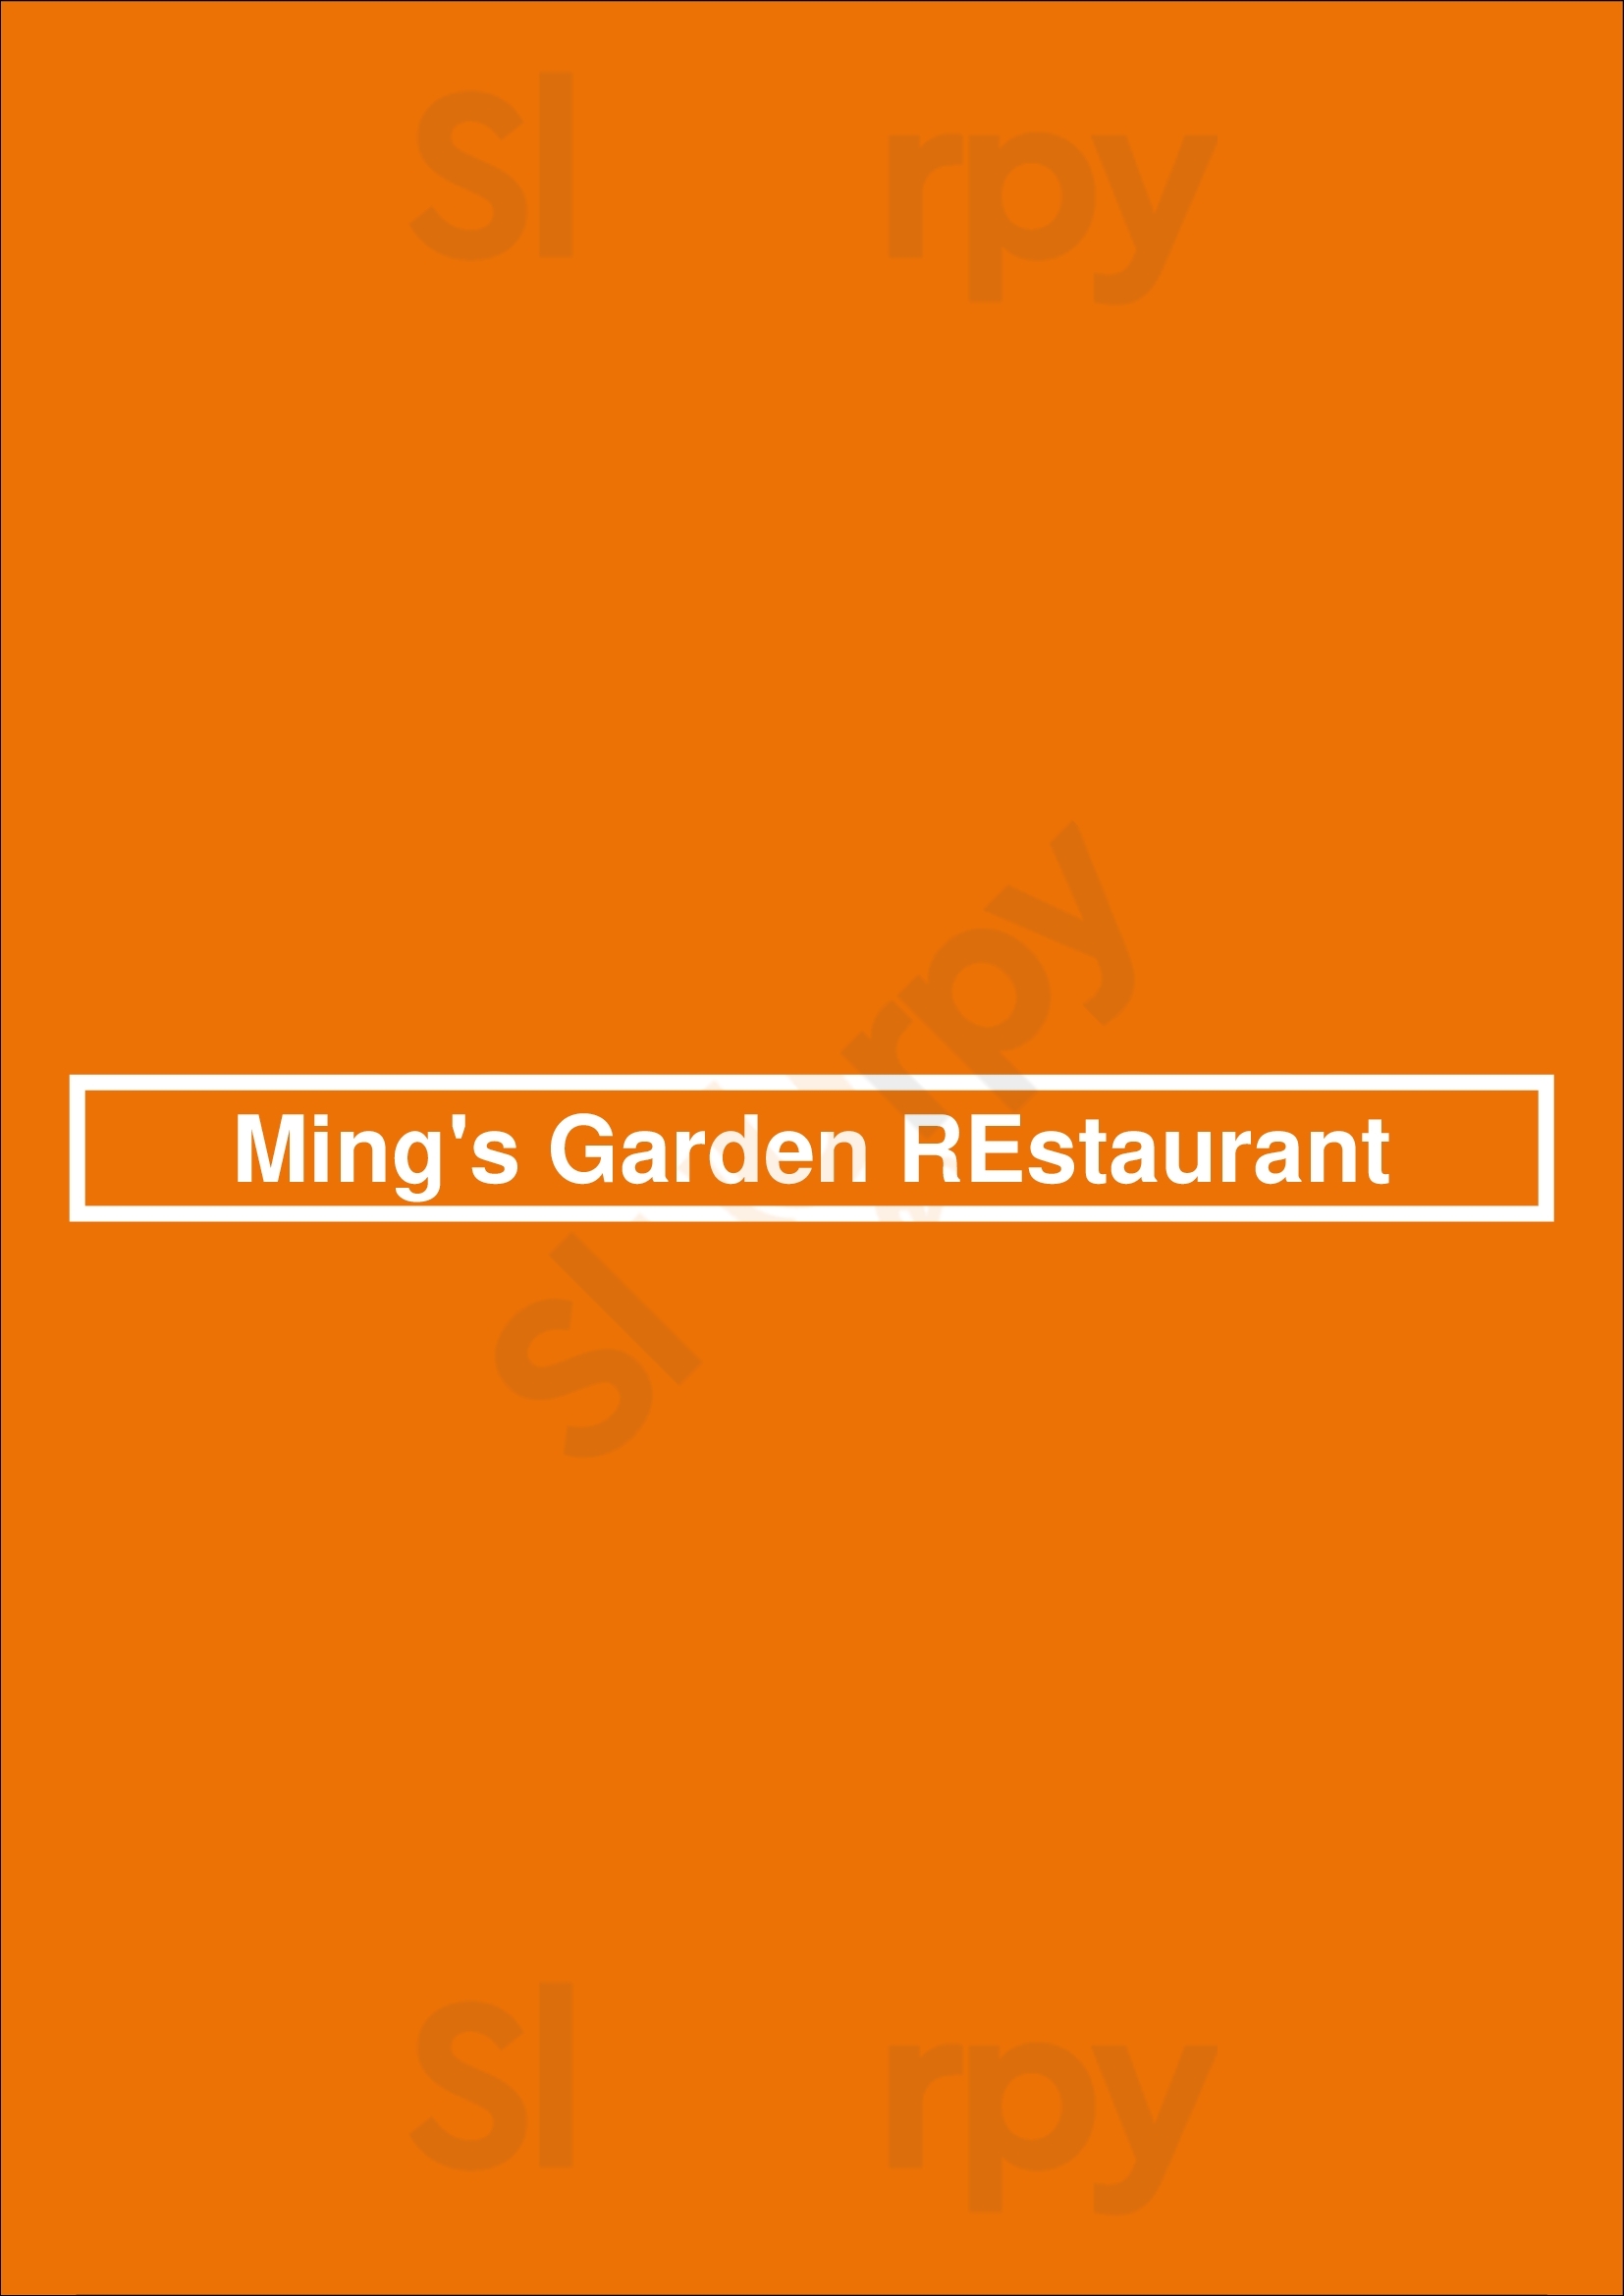 Ming's Garden Restaurant San Jose Menu - 1